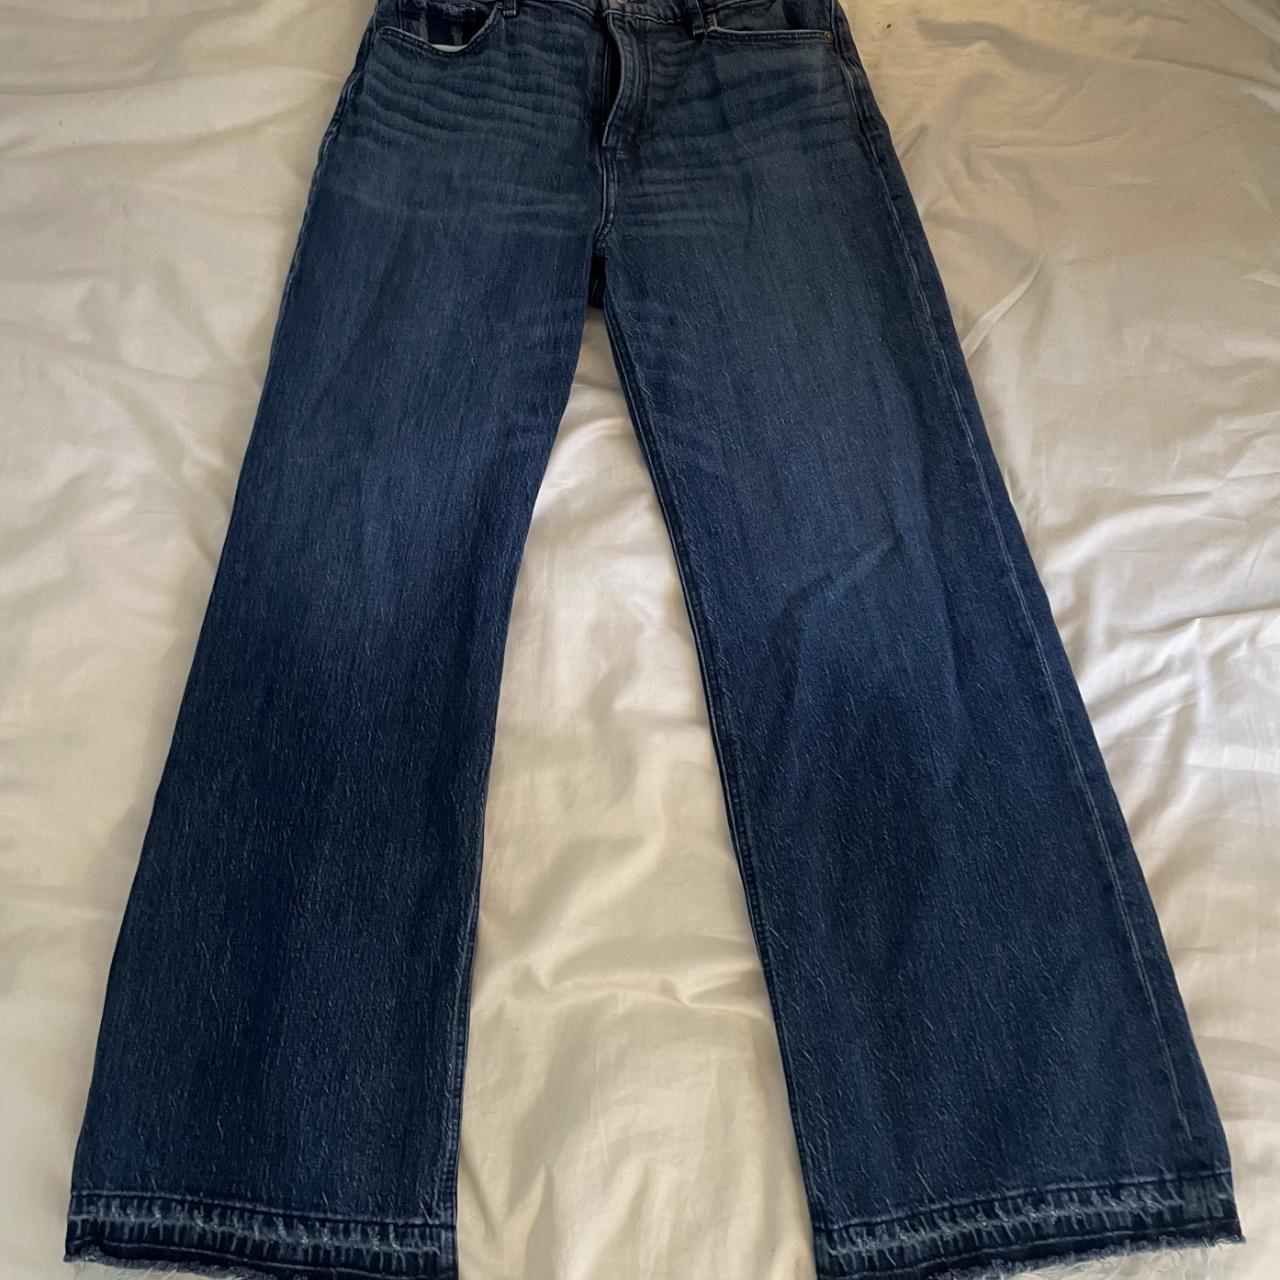 Loft wide-leg jeans Flattering pair of dark wash... - Depop